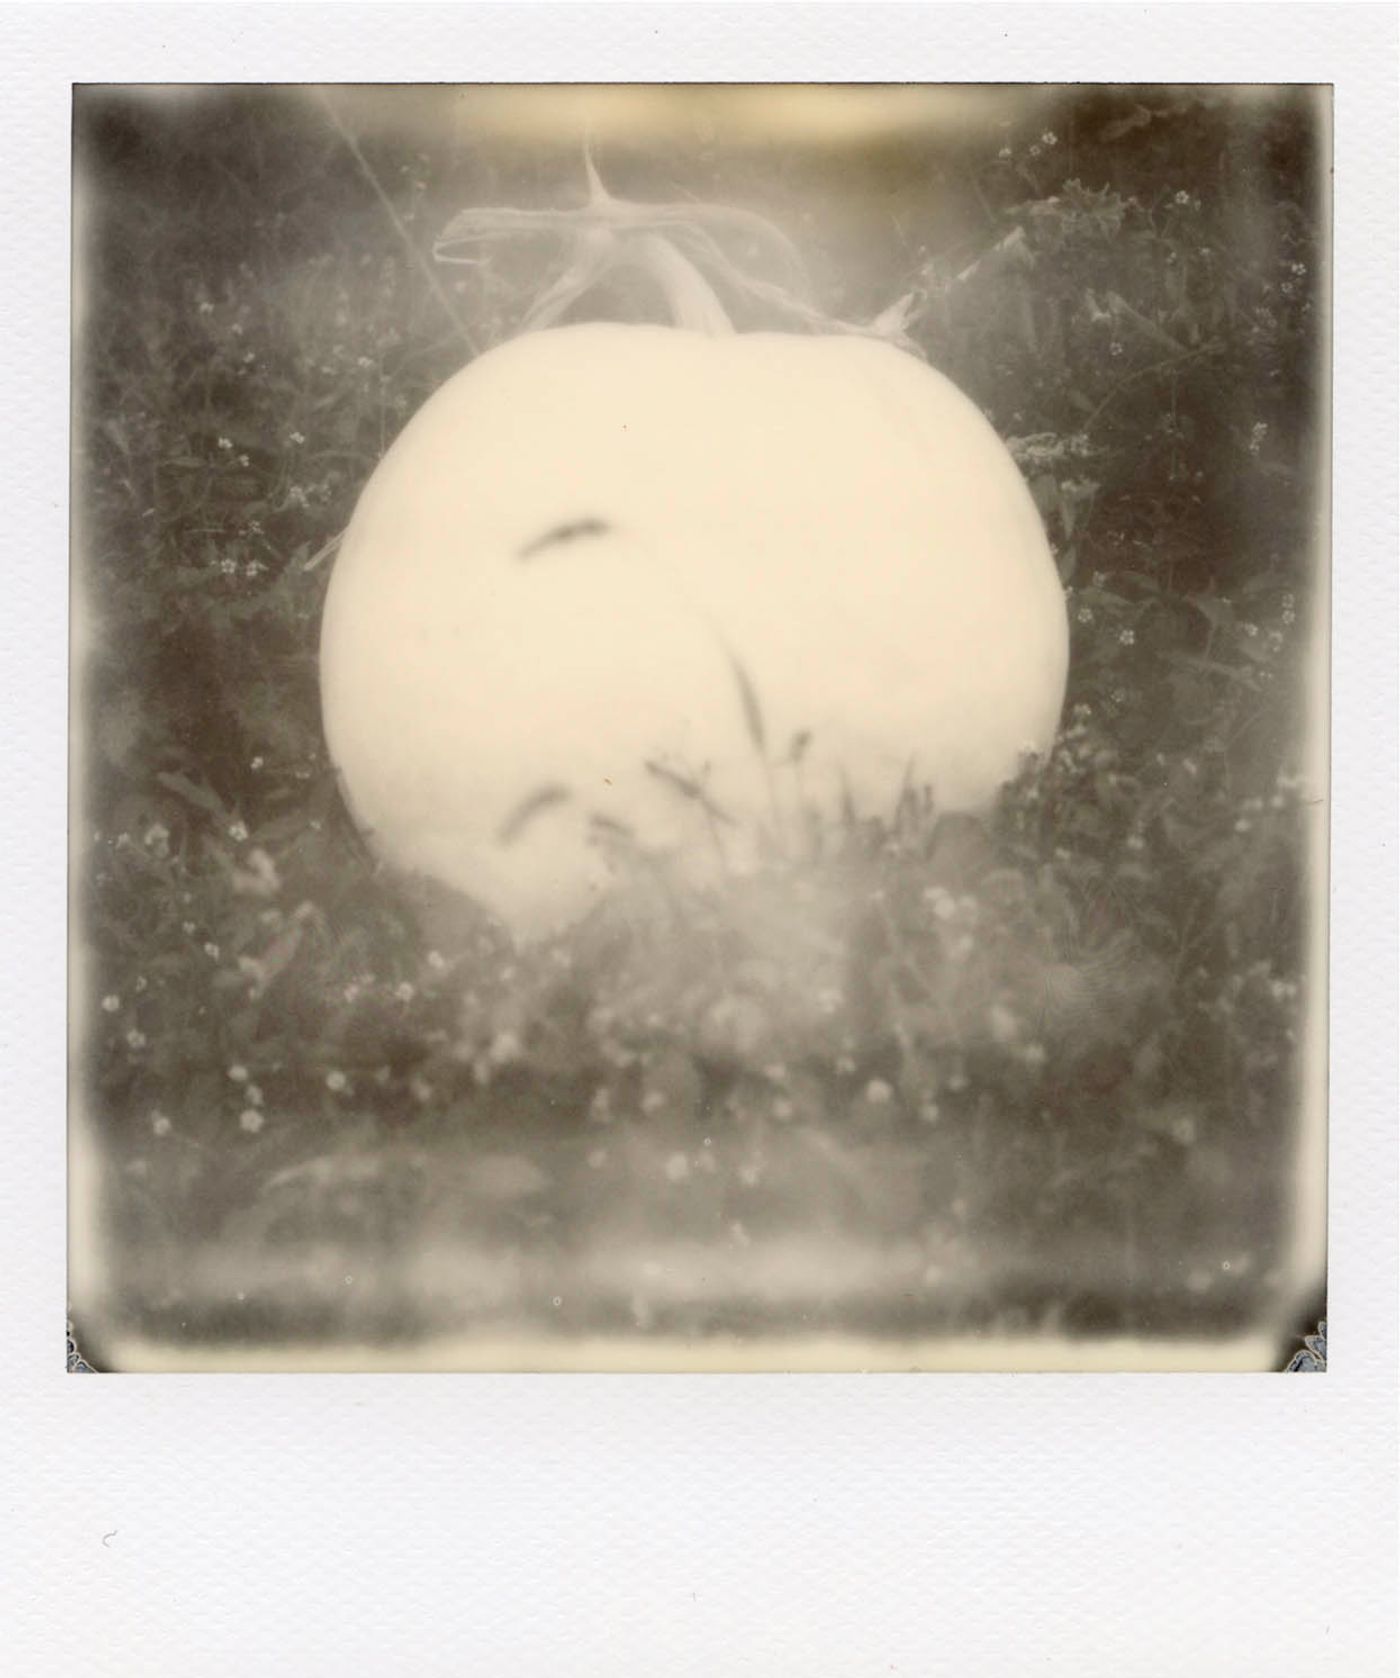 New Moon Pumpkin, 2021. Instant 160 speed film; 3.108 x 3.024 in.